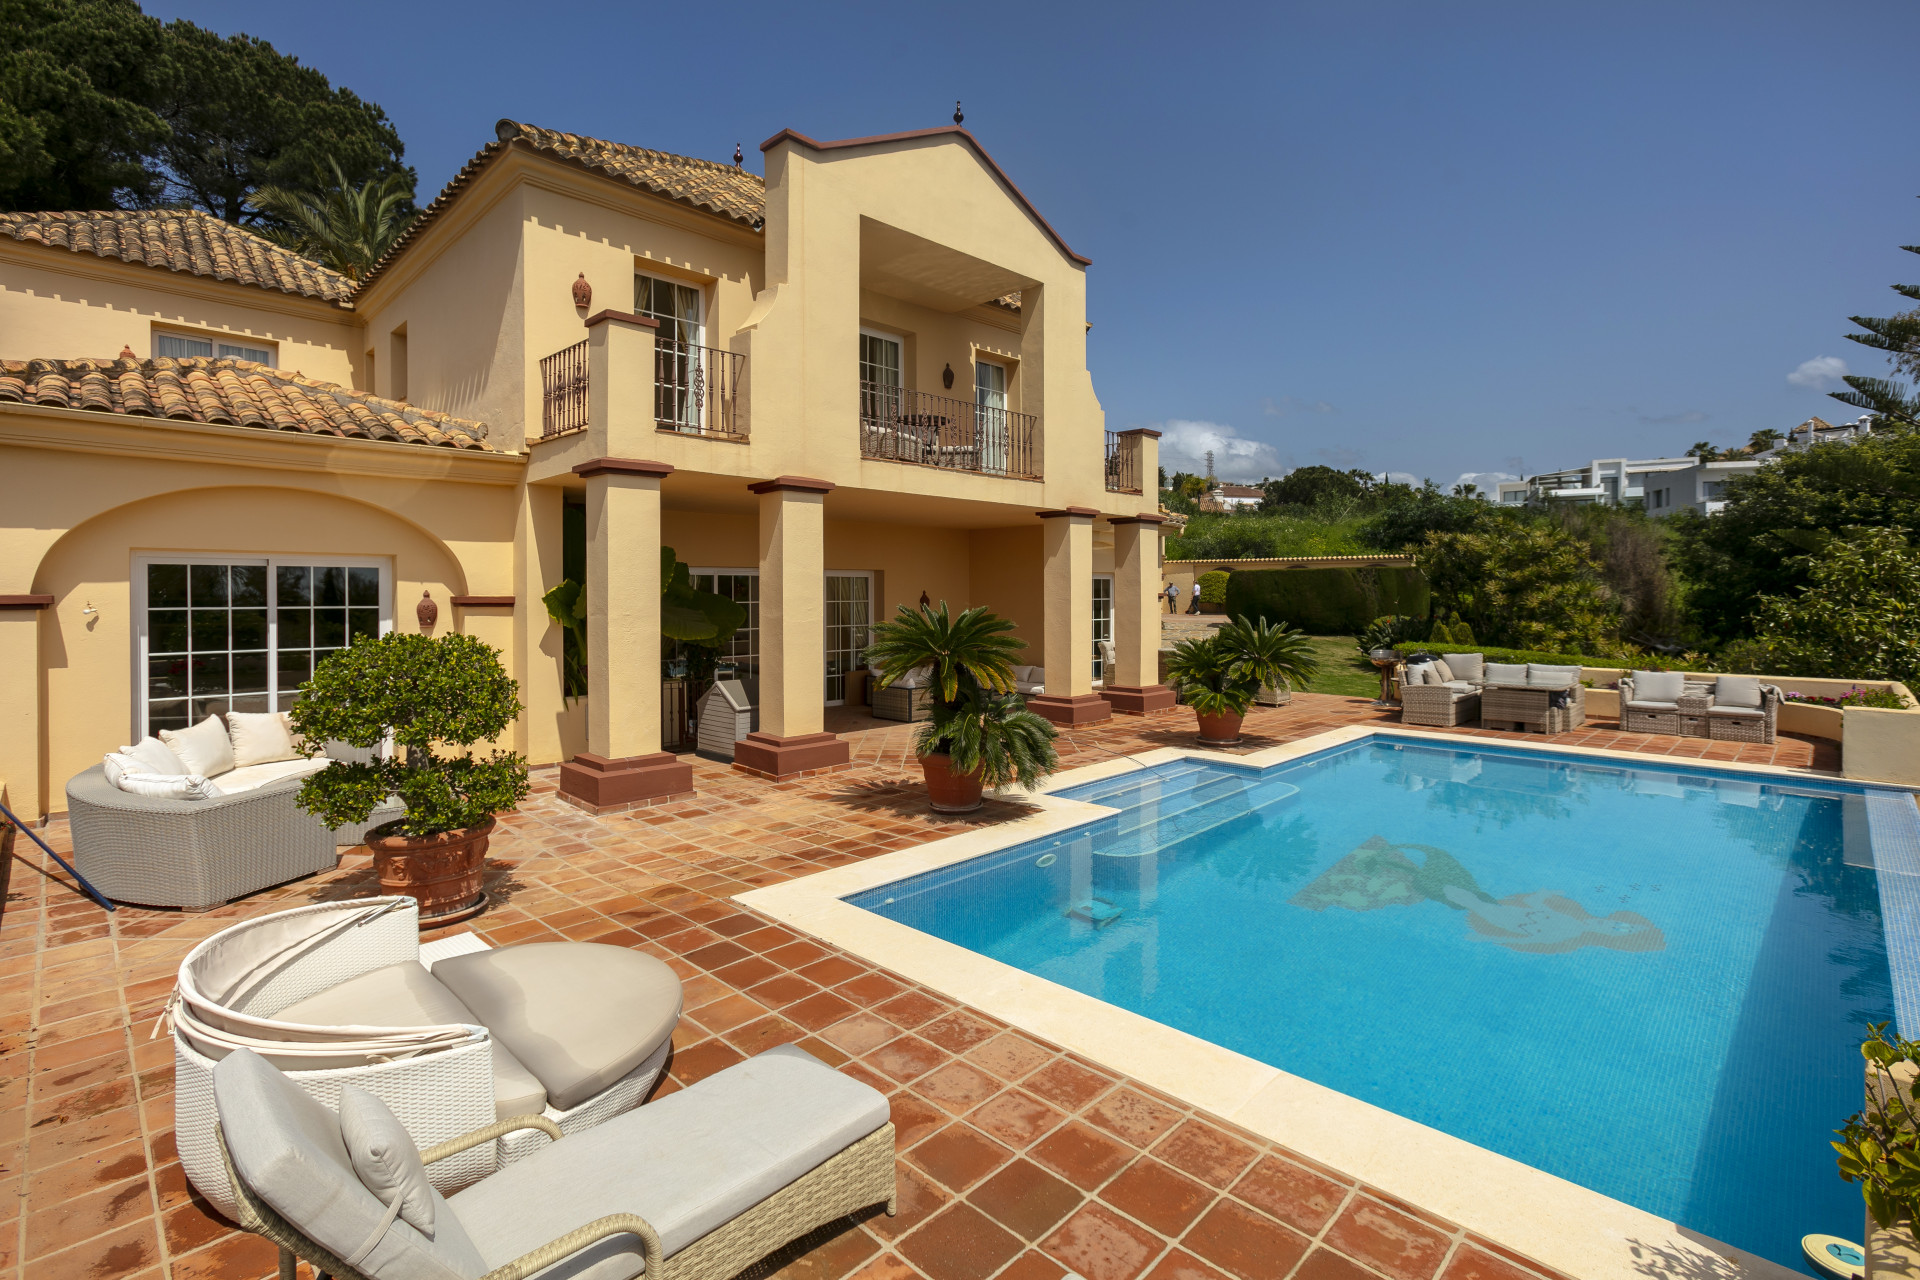 Magnificent four bedroom, South East facing villa located in El Parasio, Bena...